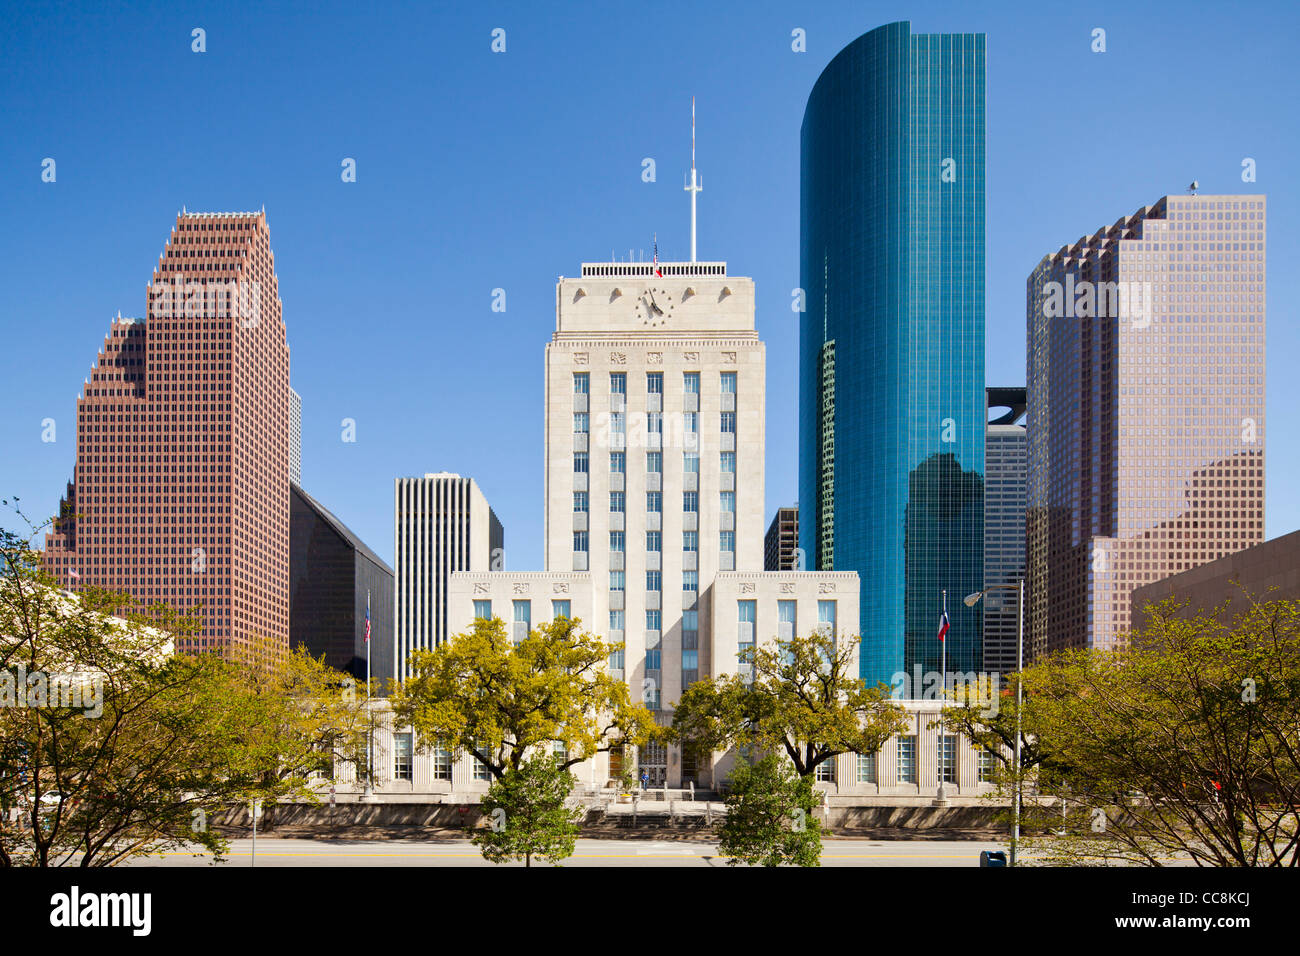 Houston Texas Skyline Silhouette Travel Stock Photo - Alamy